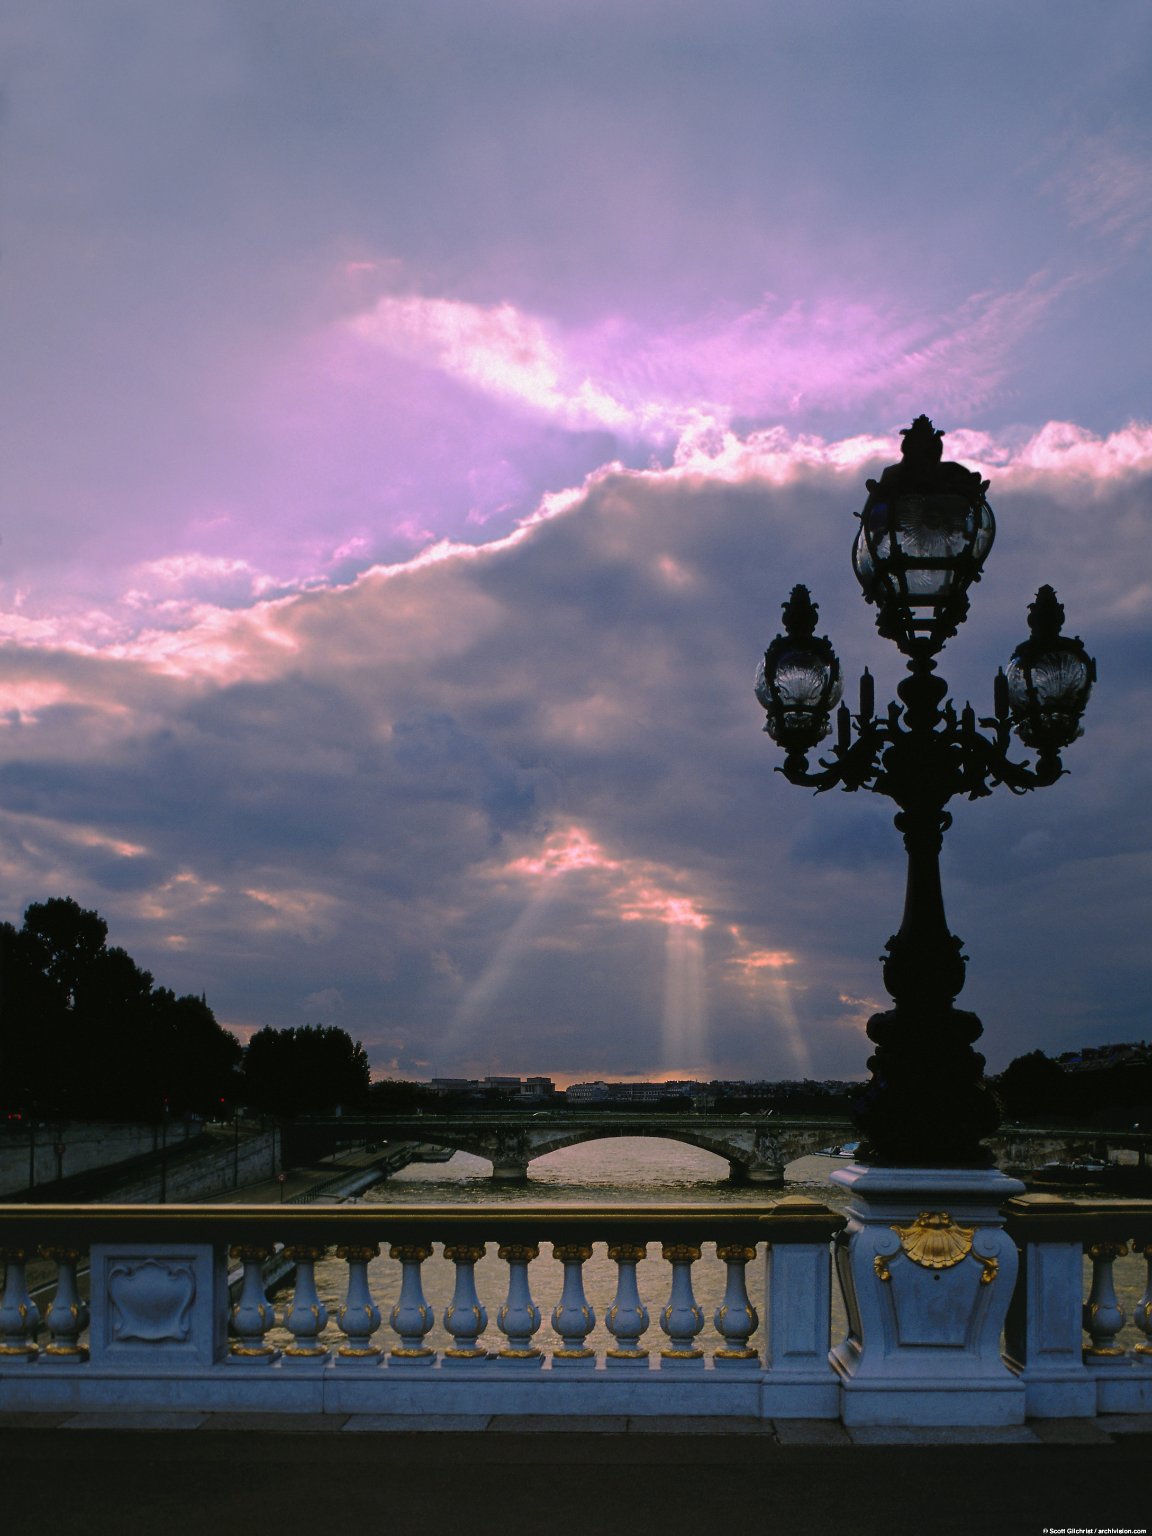 Paris: Creative Photography